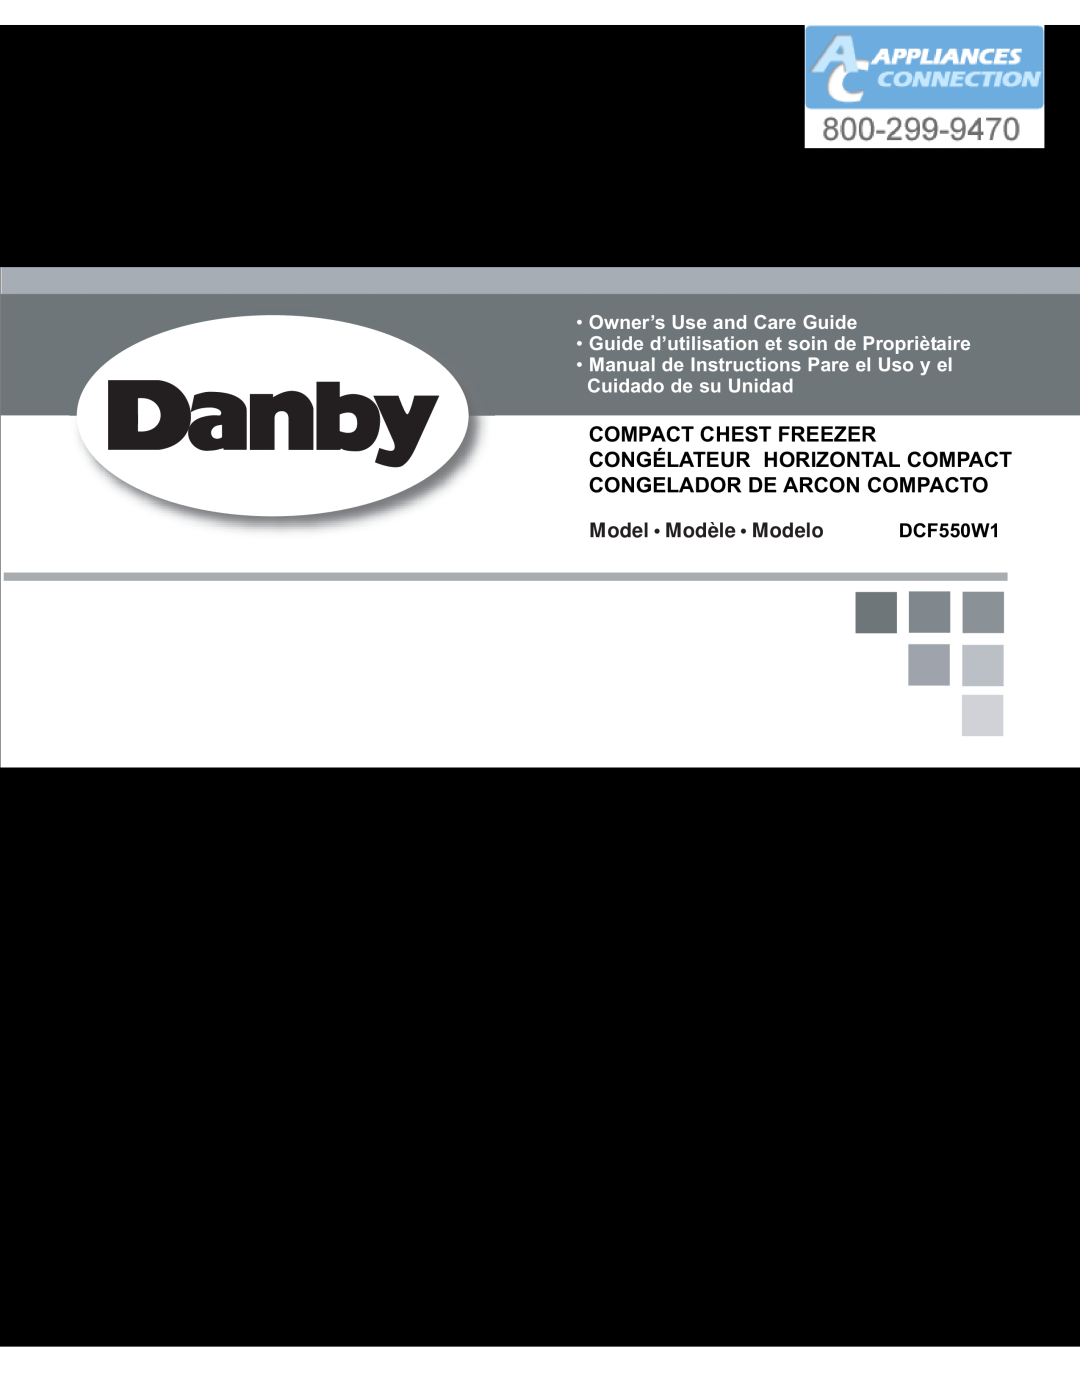 Danby DCF550W1 manual Compact Chest Freezer, Congélateur Horizontal Compact, Congelador De Arcon Compacto 